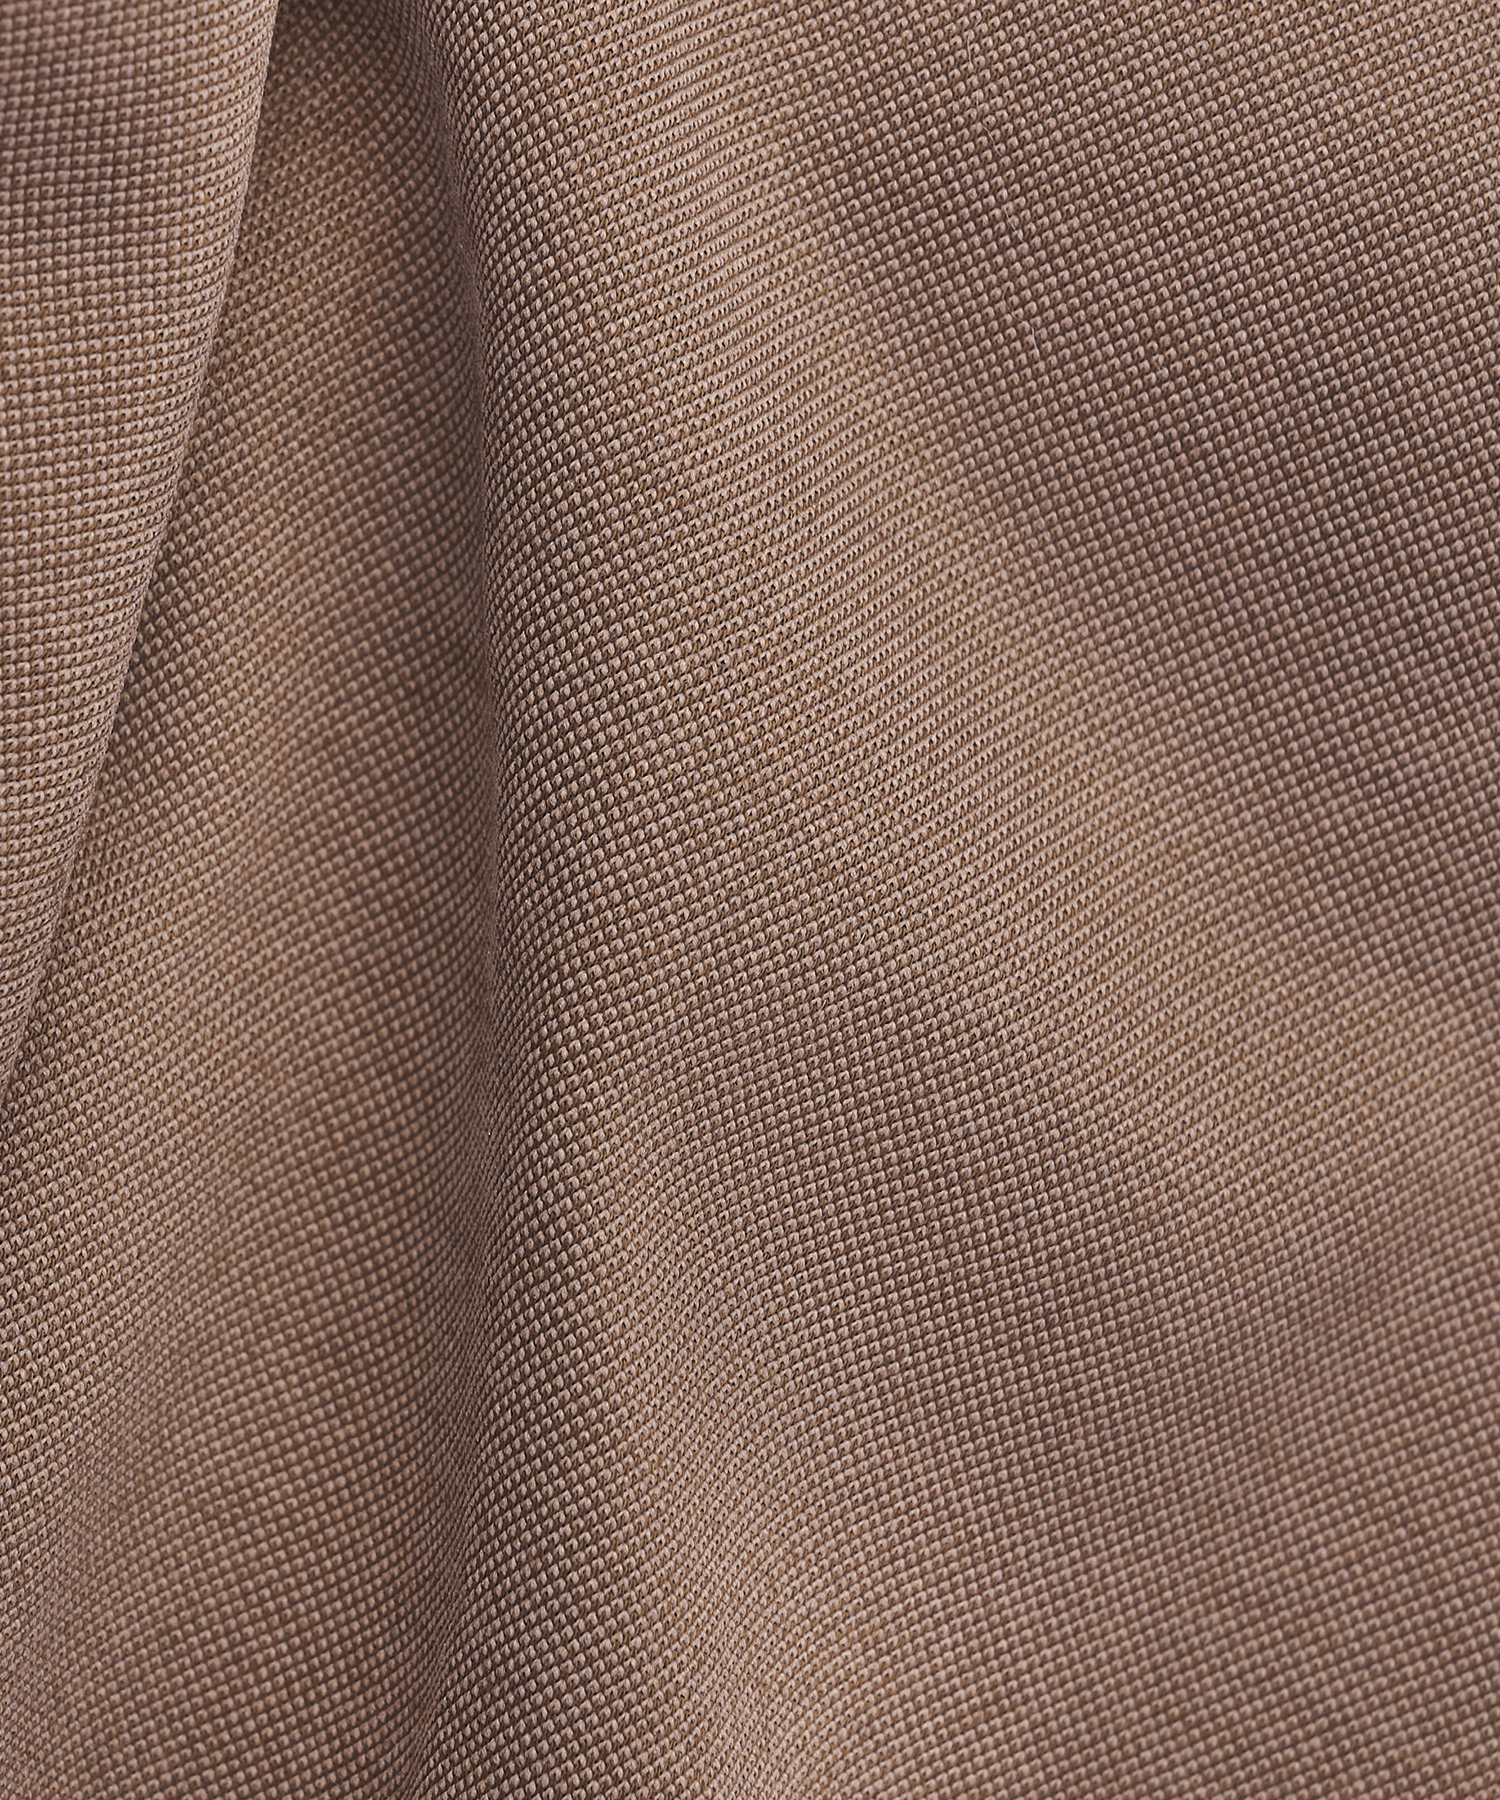 Profuomo Japanese knitted overhemd katoen bruin - The Society Shop